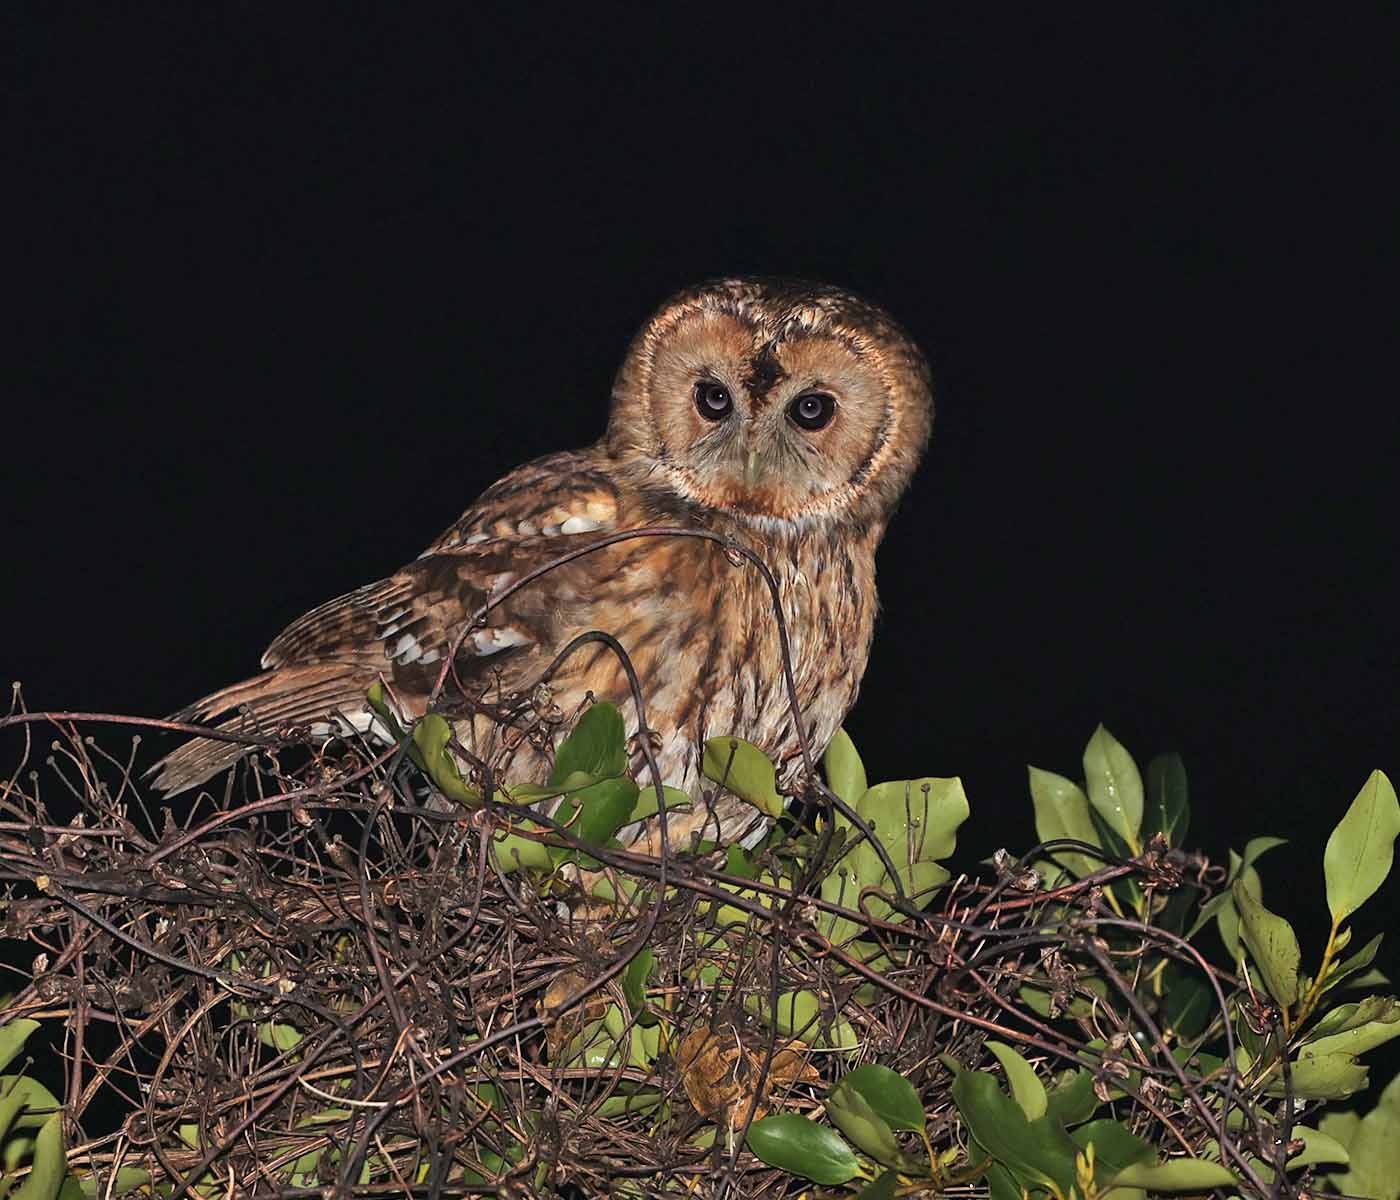 Tawny Owl by Steve Hopper at South Brent